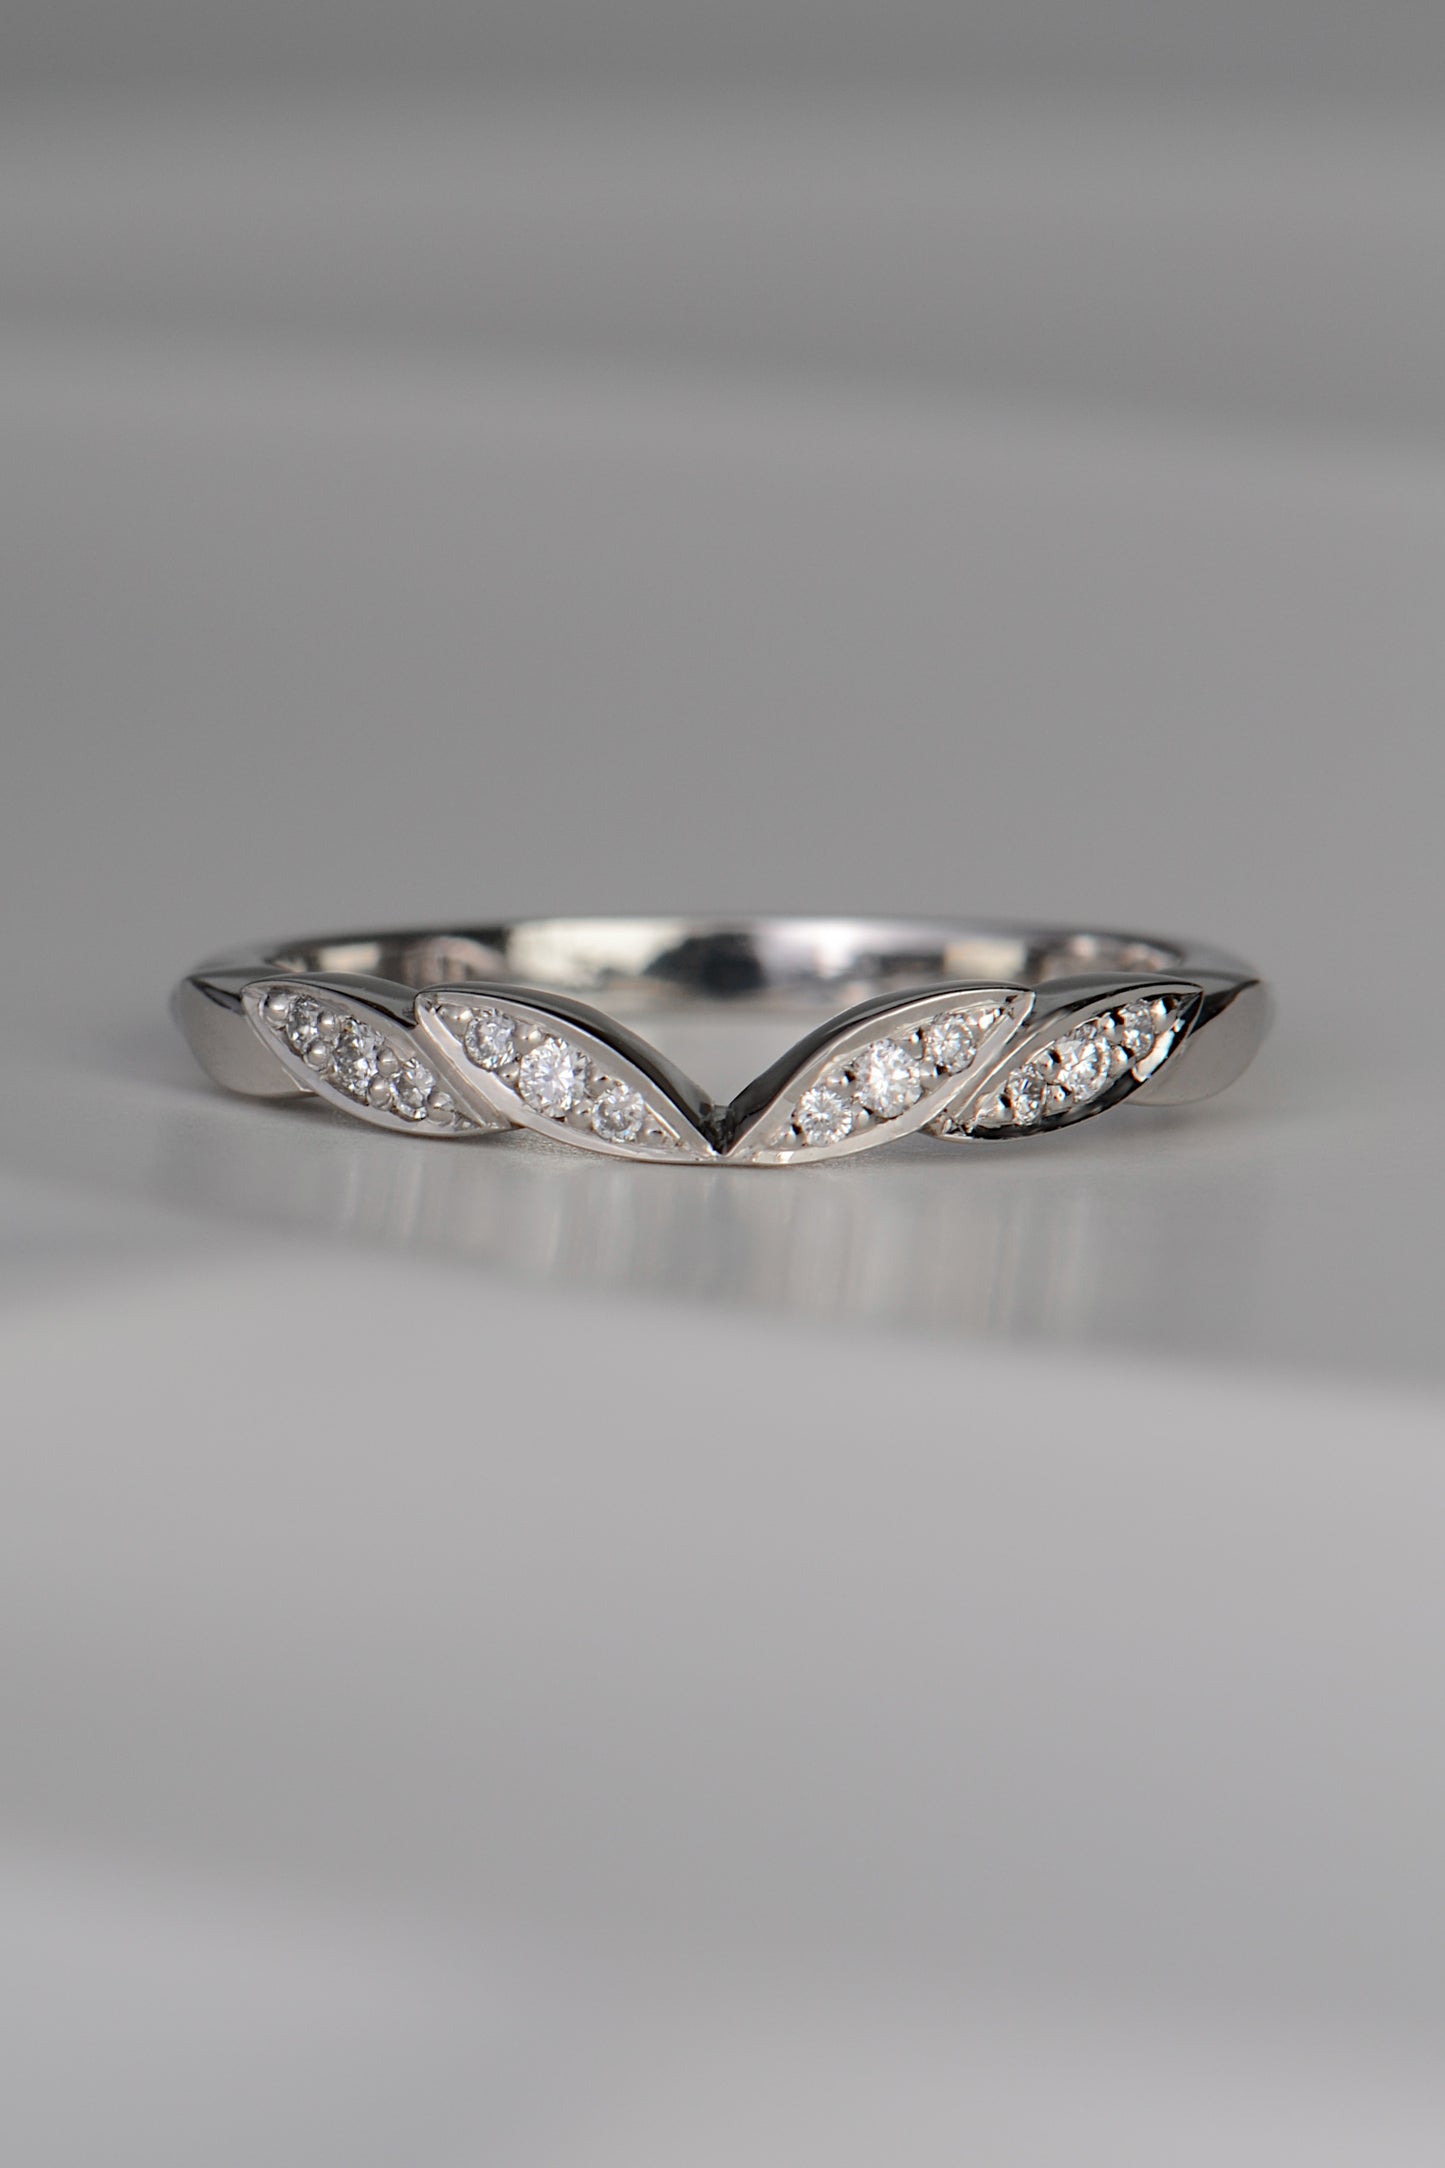 Platinum and diamond four petal shaped wedding ring